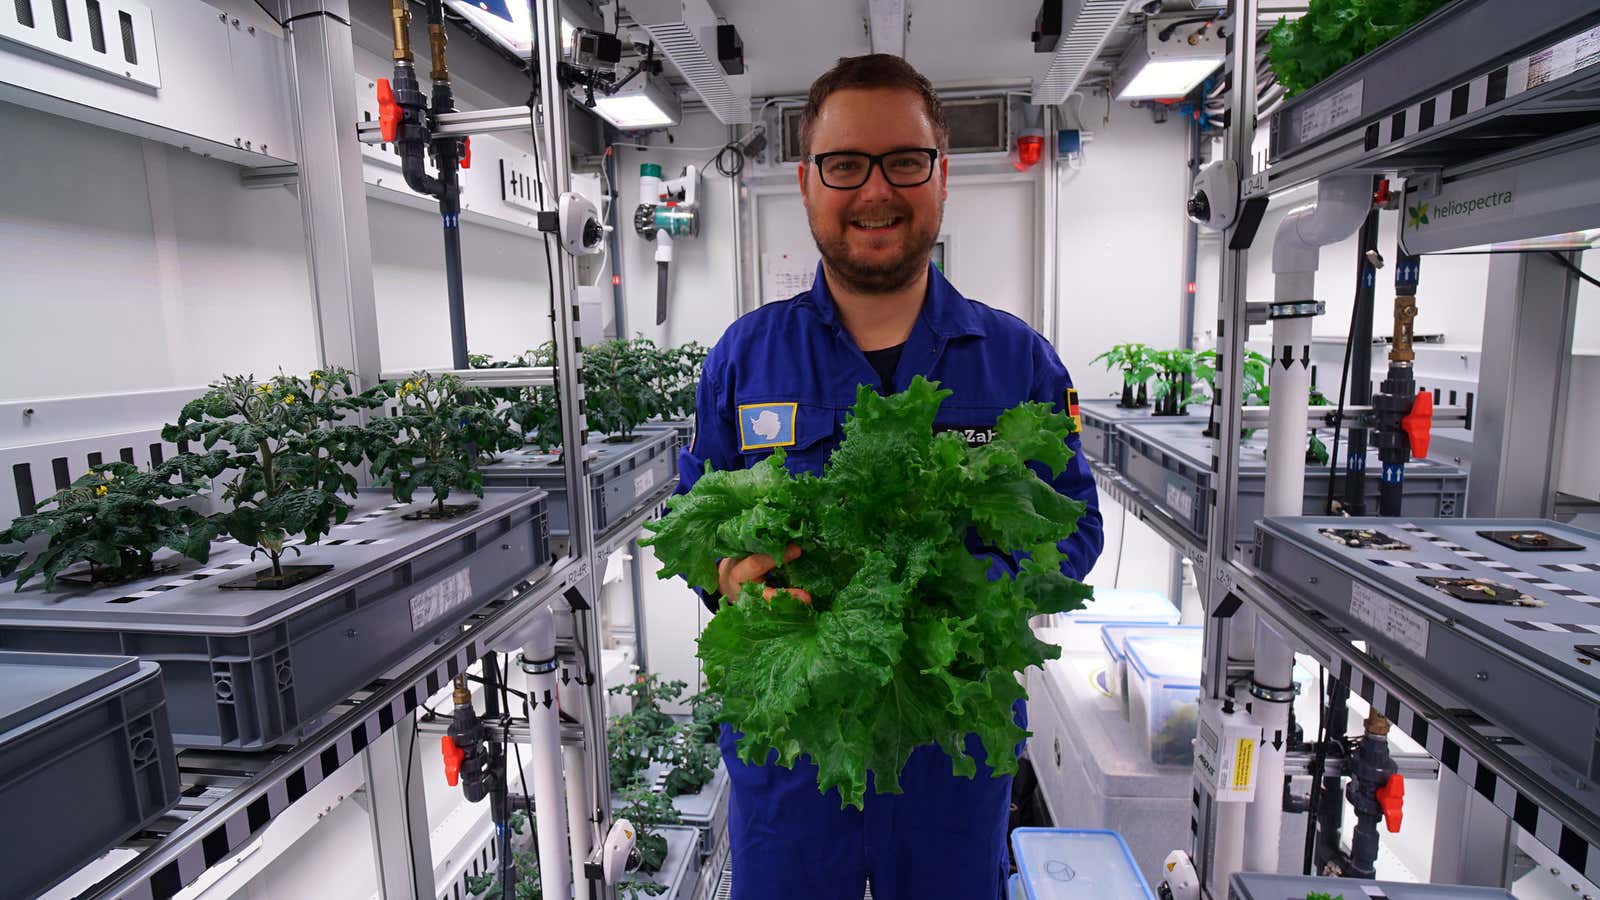 Scientist Paul Zabel shows off some freshly grown vegetables.